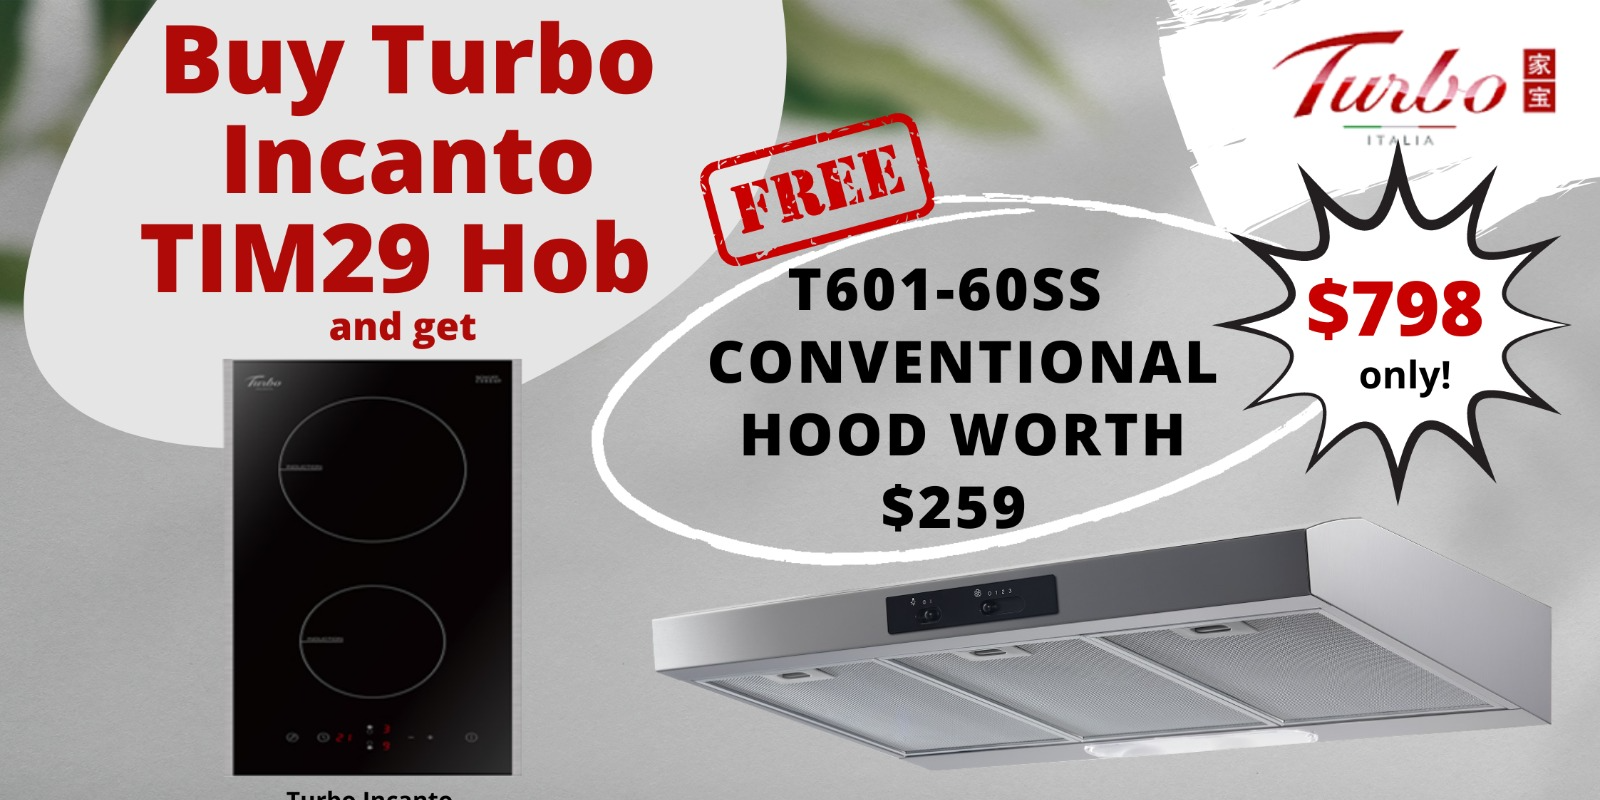 [Turbo Hob and Hood Promo] FREE Turbo Incanto T601-60SS Conventional Hood Worth $259 (T&Cs apply)!